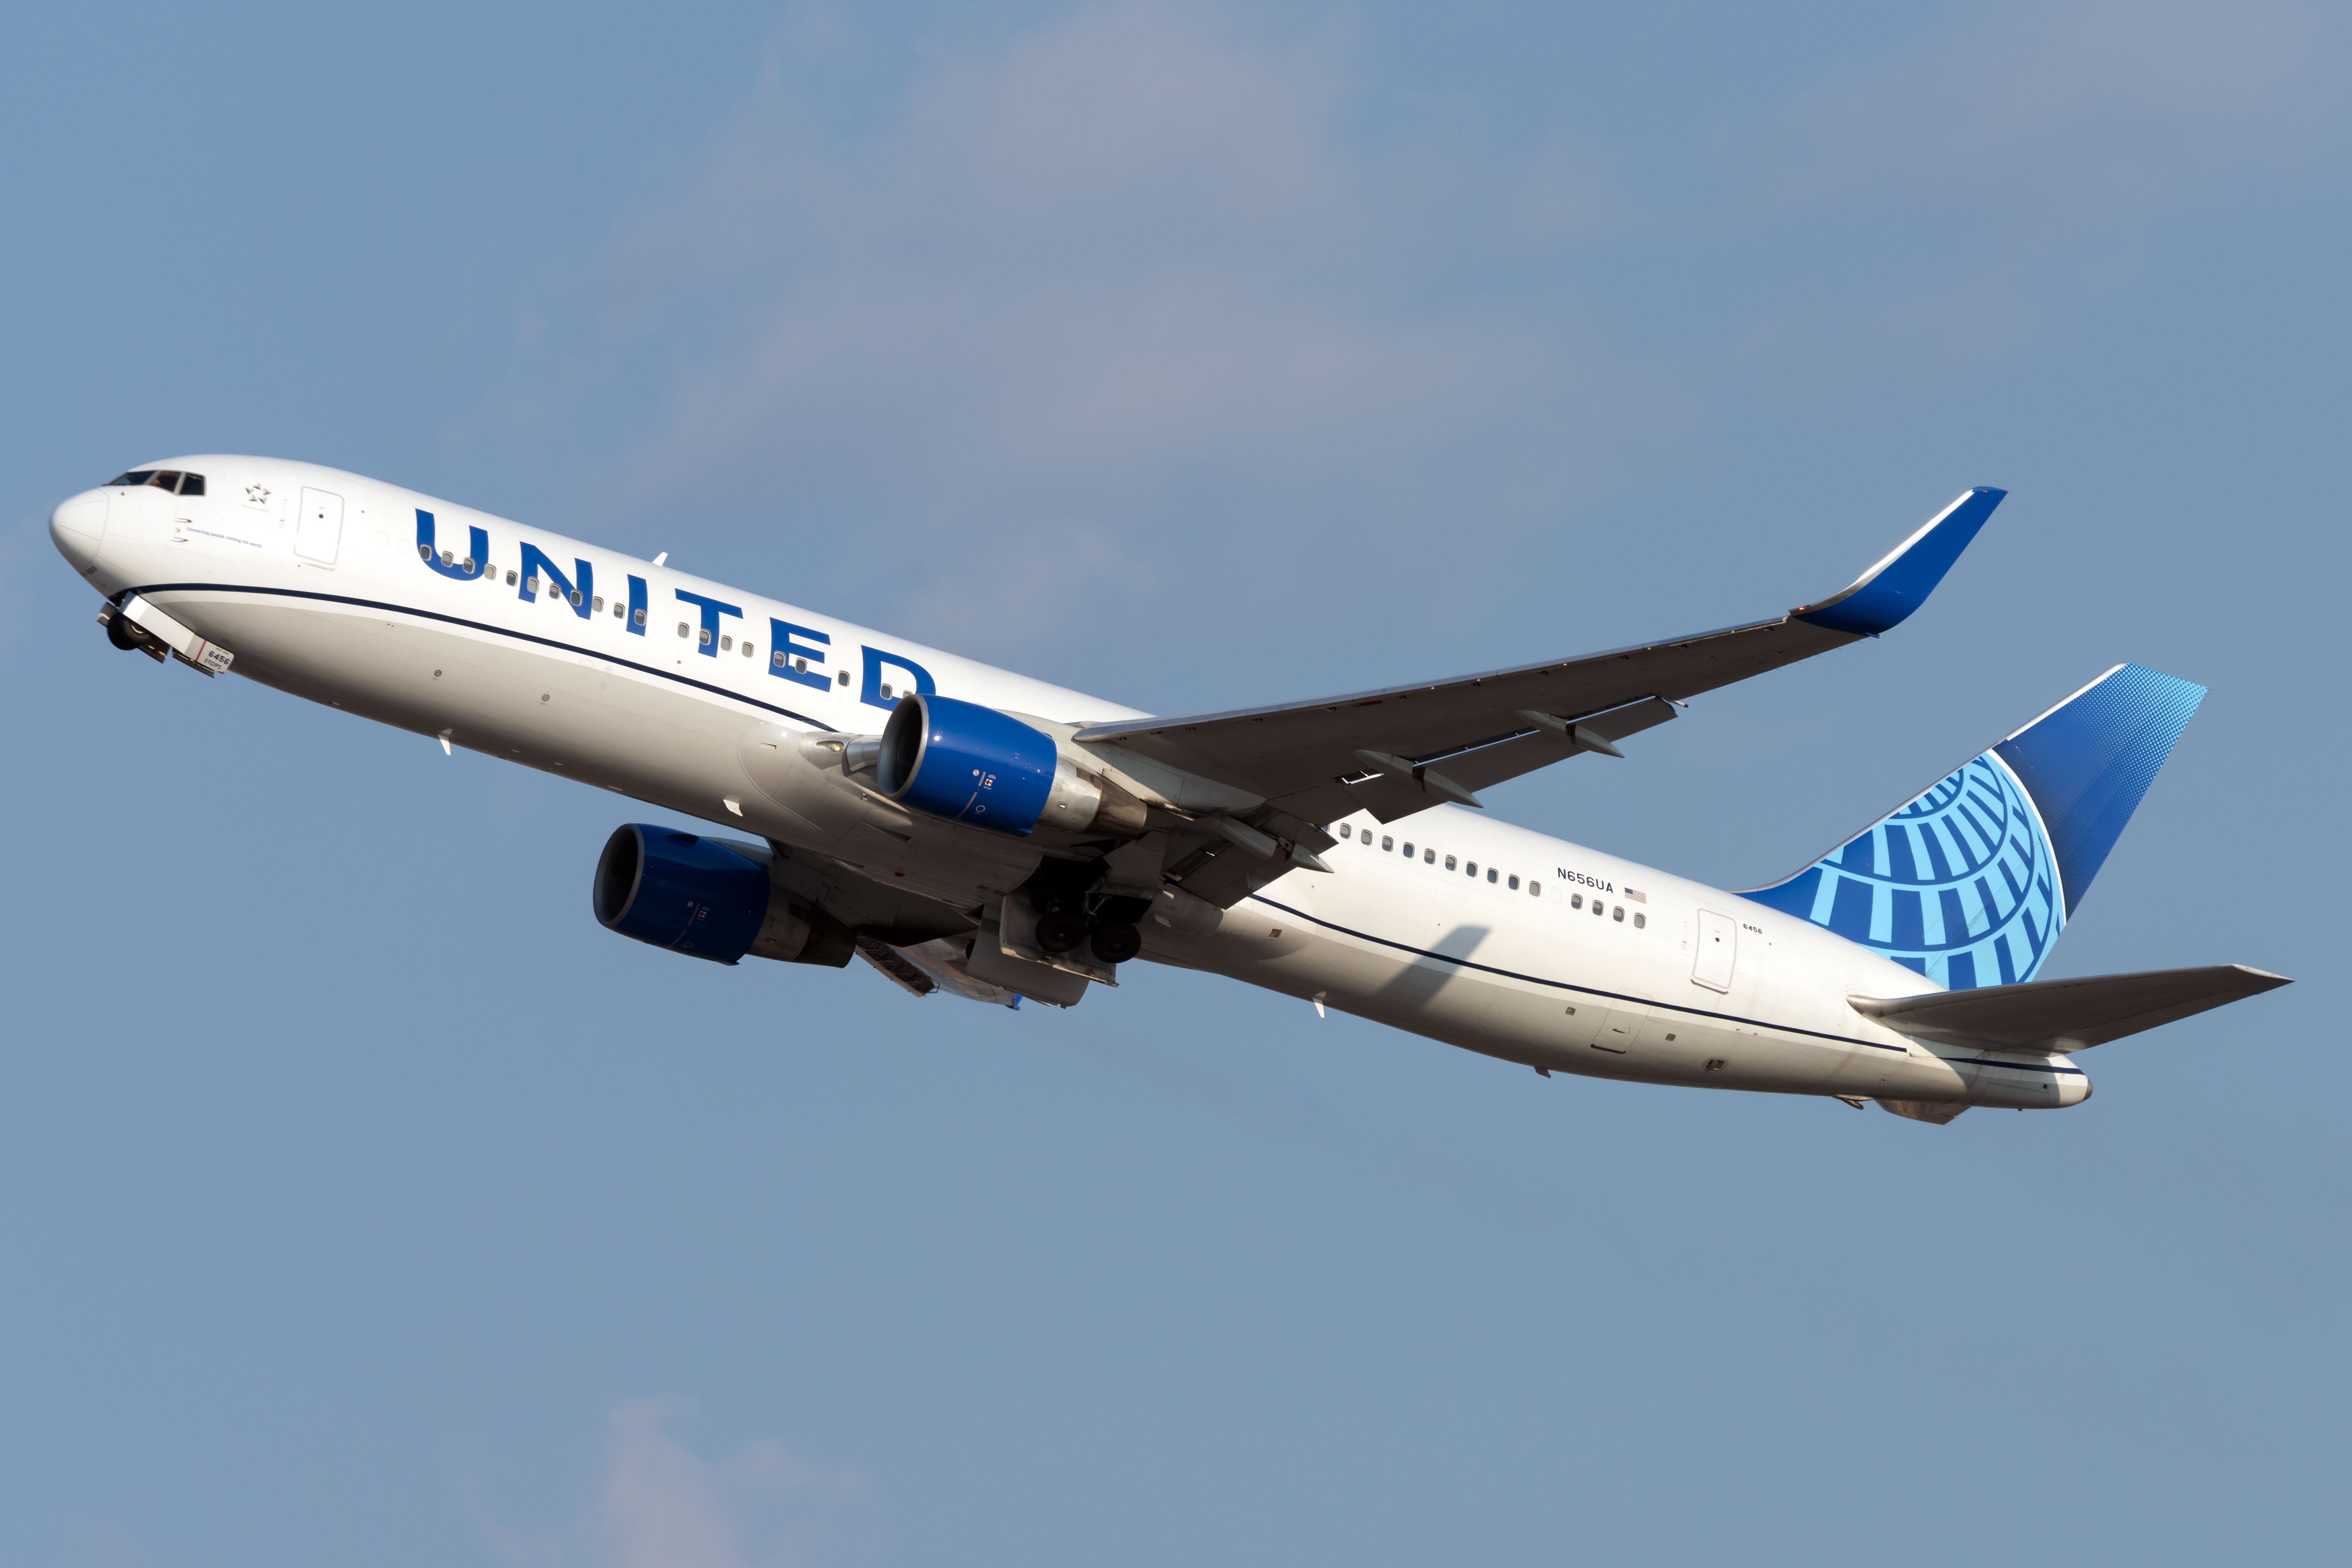 United Airlines B767-300ER take off